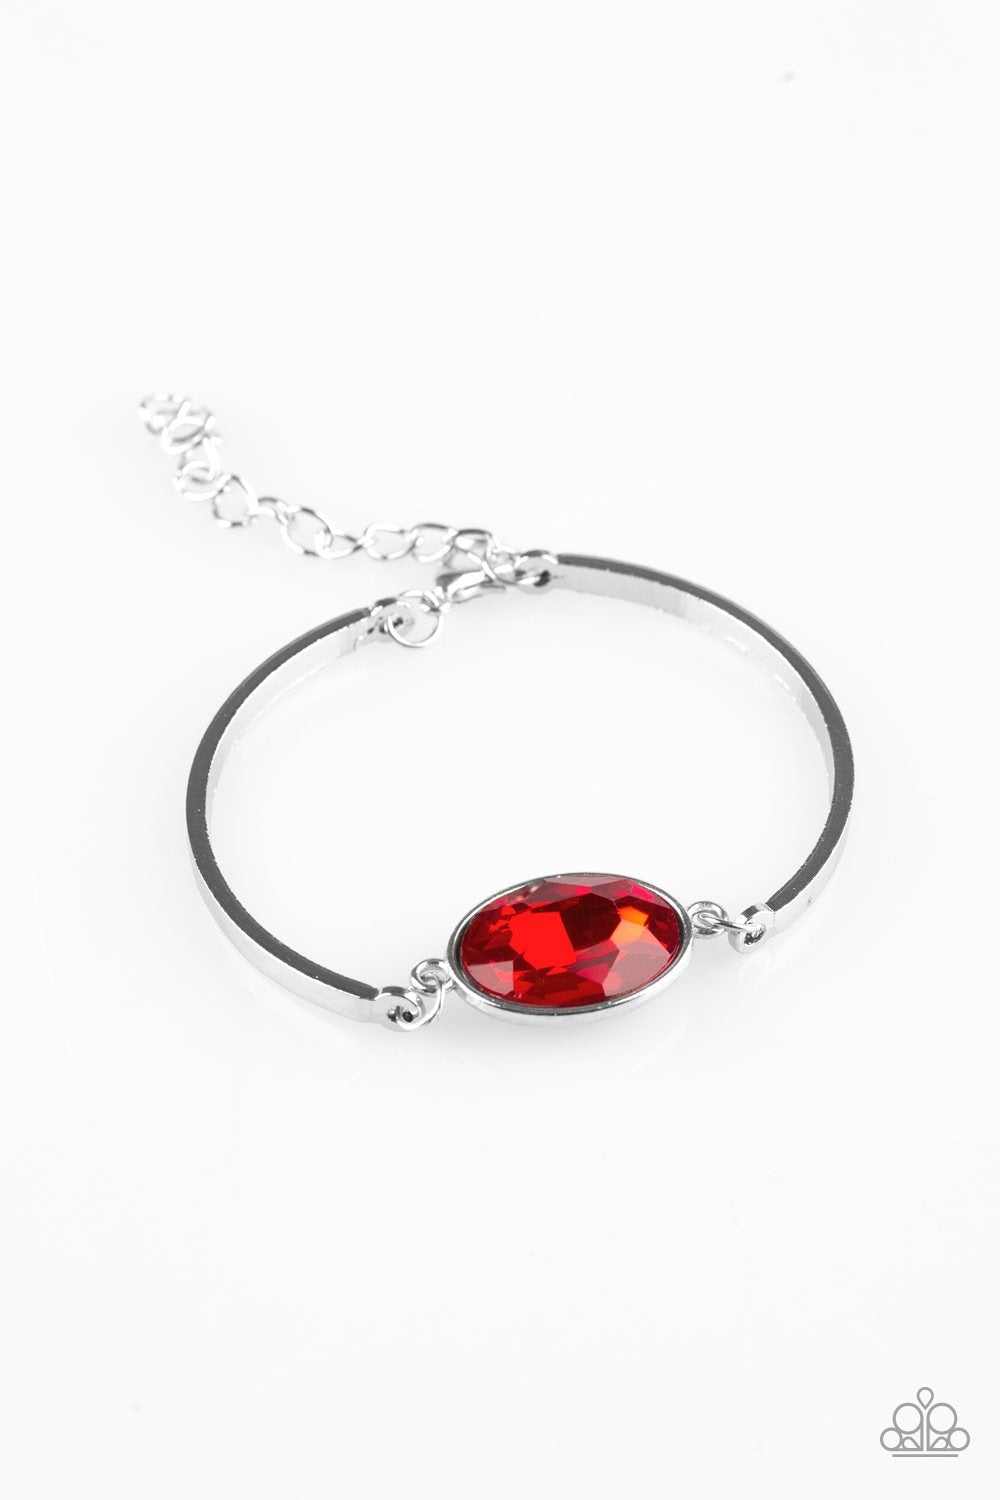 Definitely Dashing Red Gem Bracelet - Paparazzi Accessories-CarasShop.com - $5 Jewelry by Cara Jewels